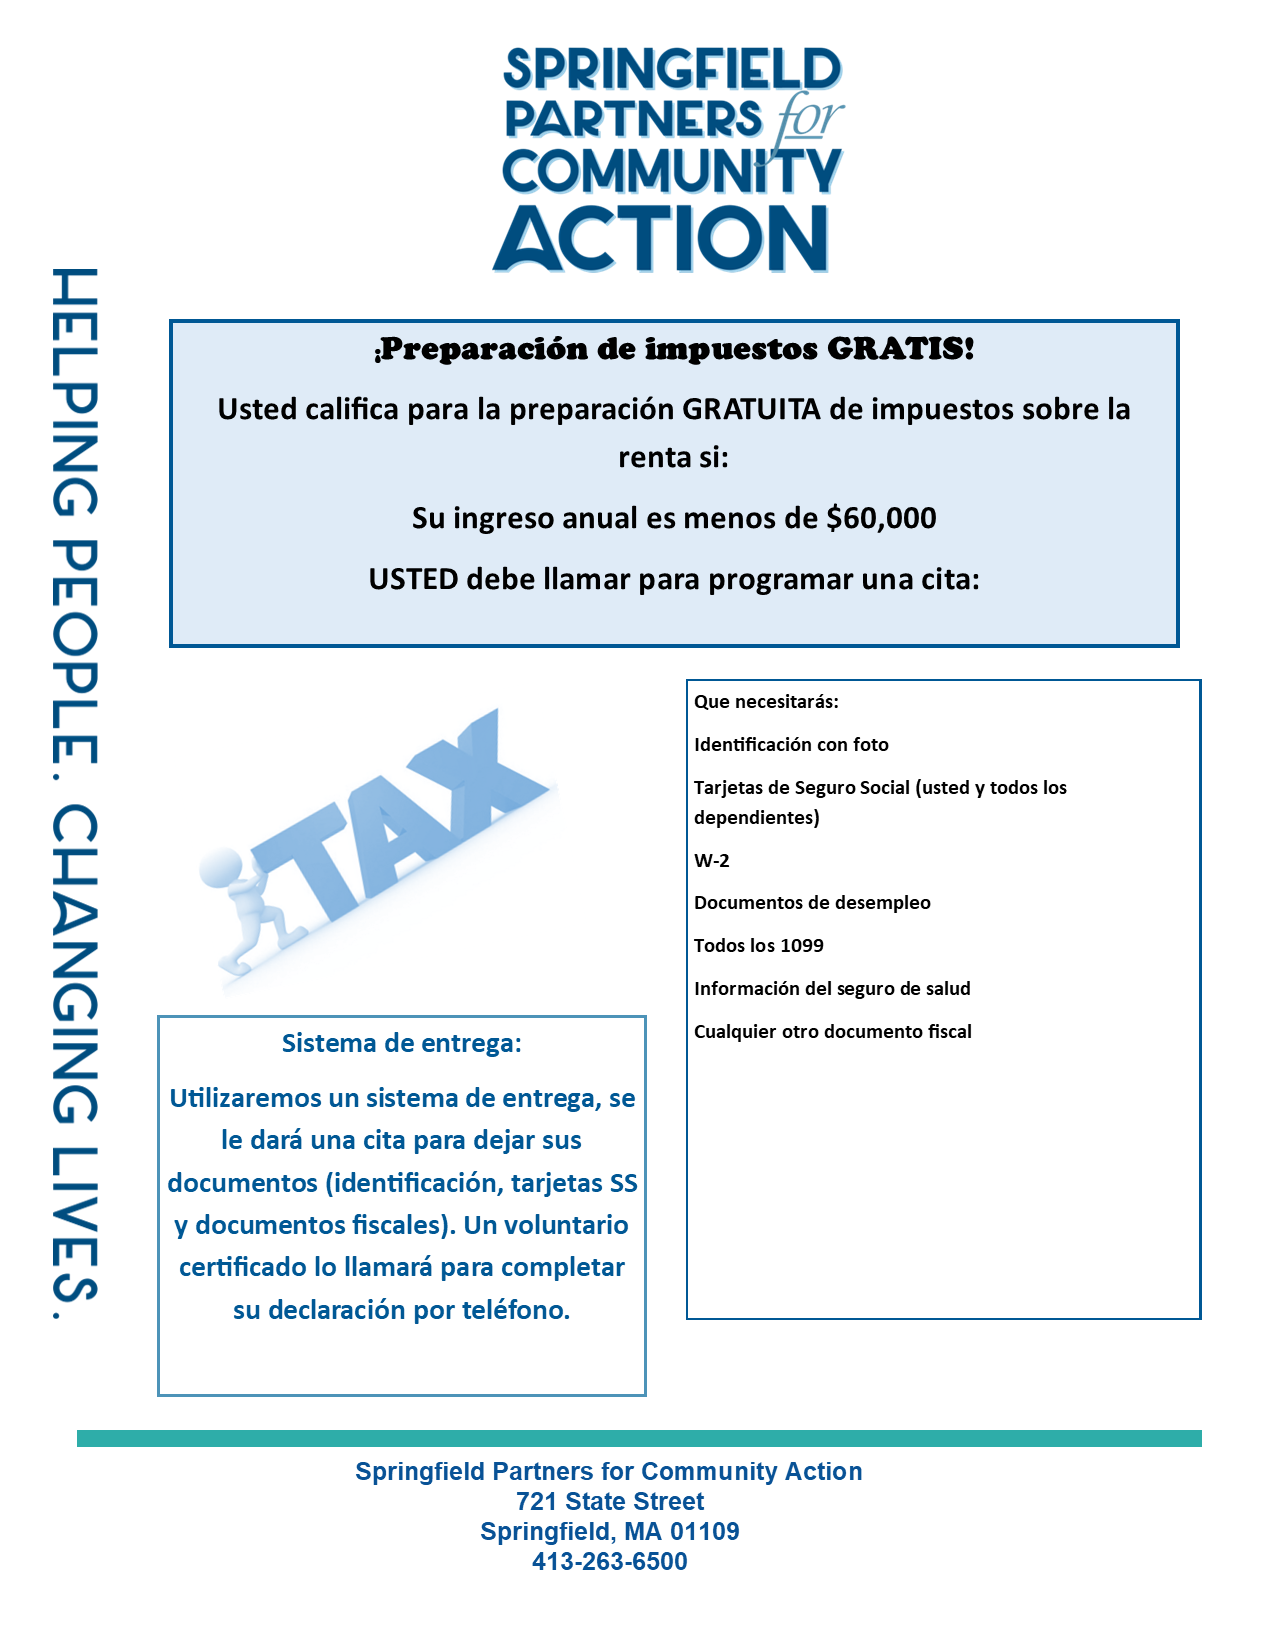 Free tax preparation, VITA, Efile